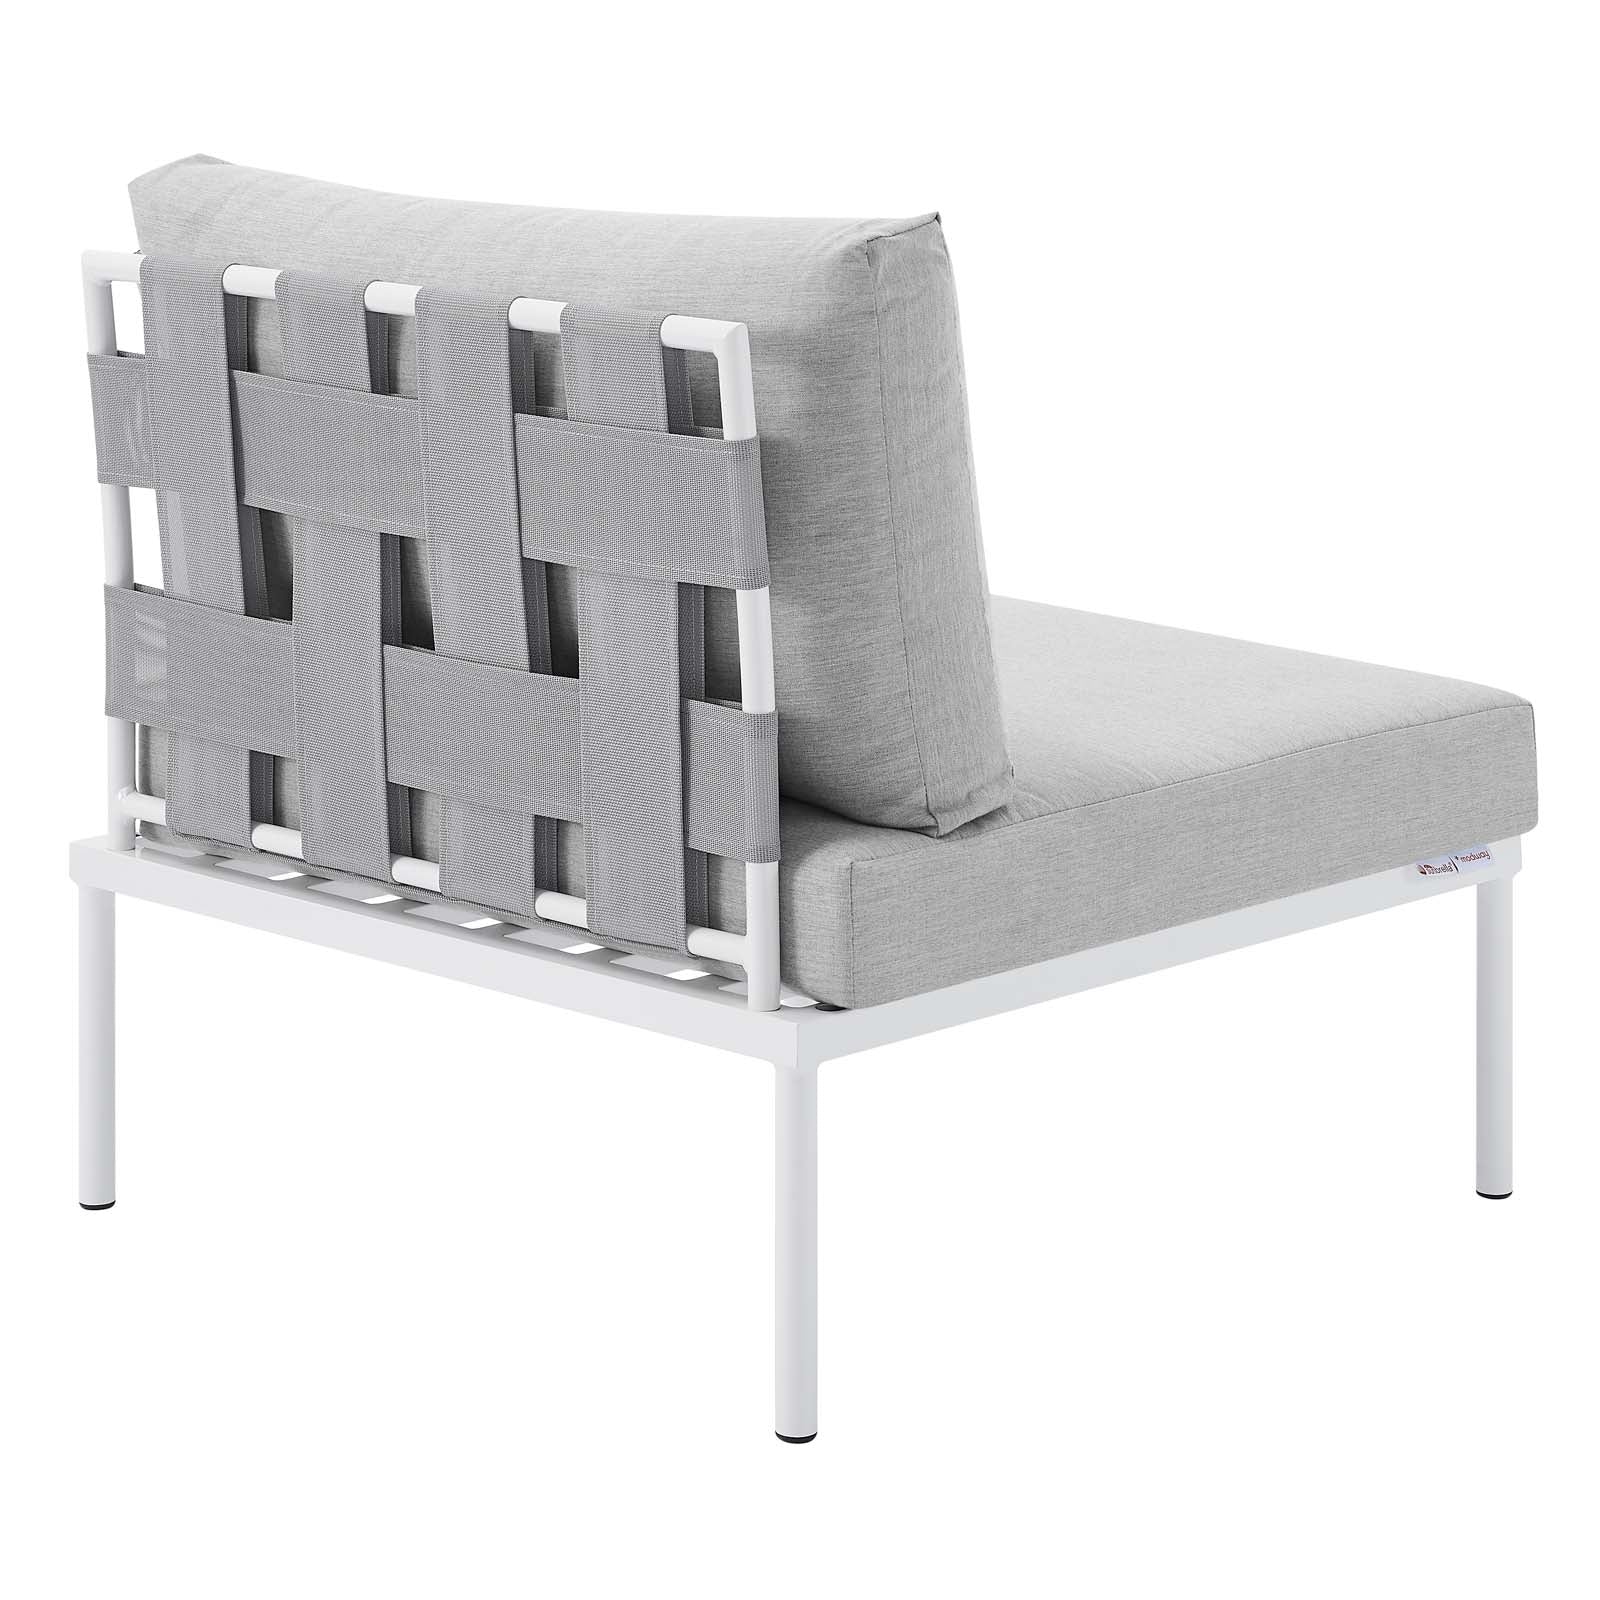 Harmony 10-Piece Sunbrella® Outdoor Patio Aluminum Sectional Sofa Set-Outdoor Set-Modway-Wall2Wall Furnishings